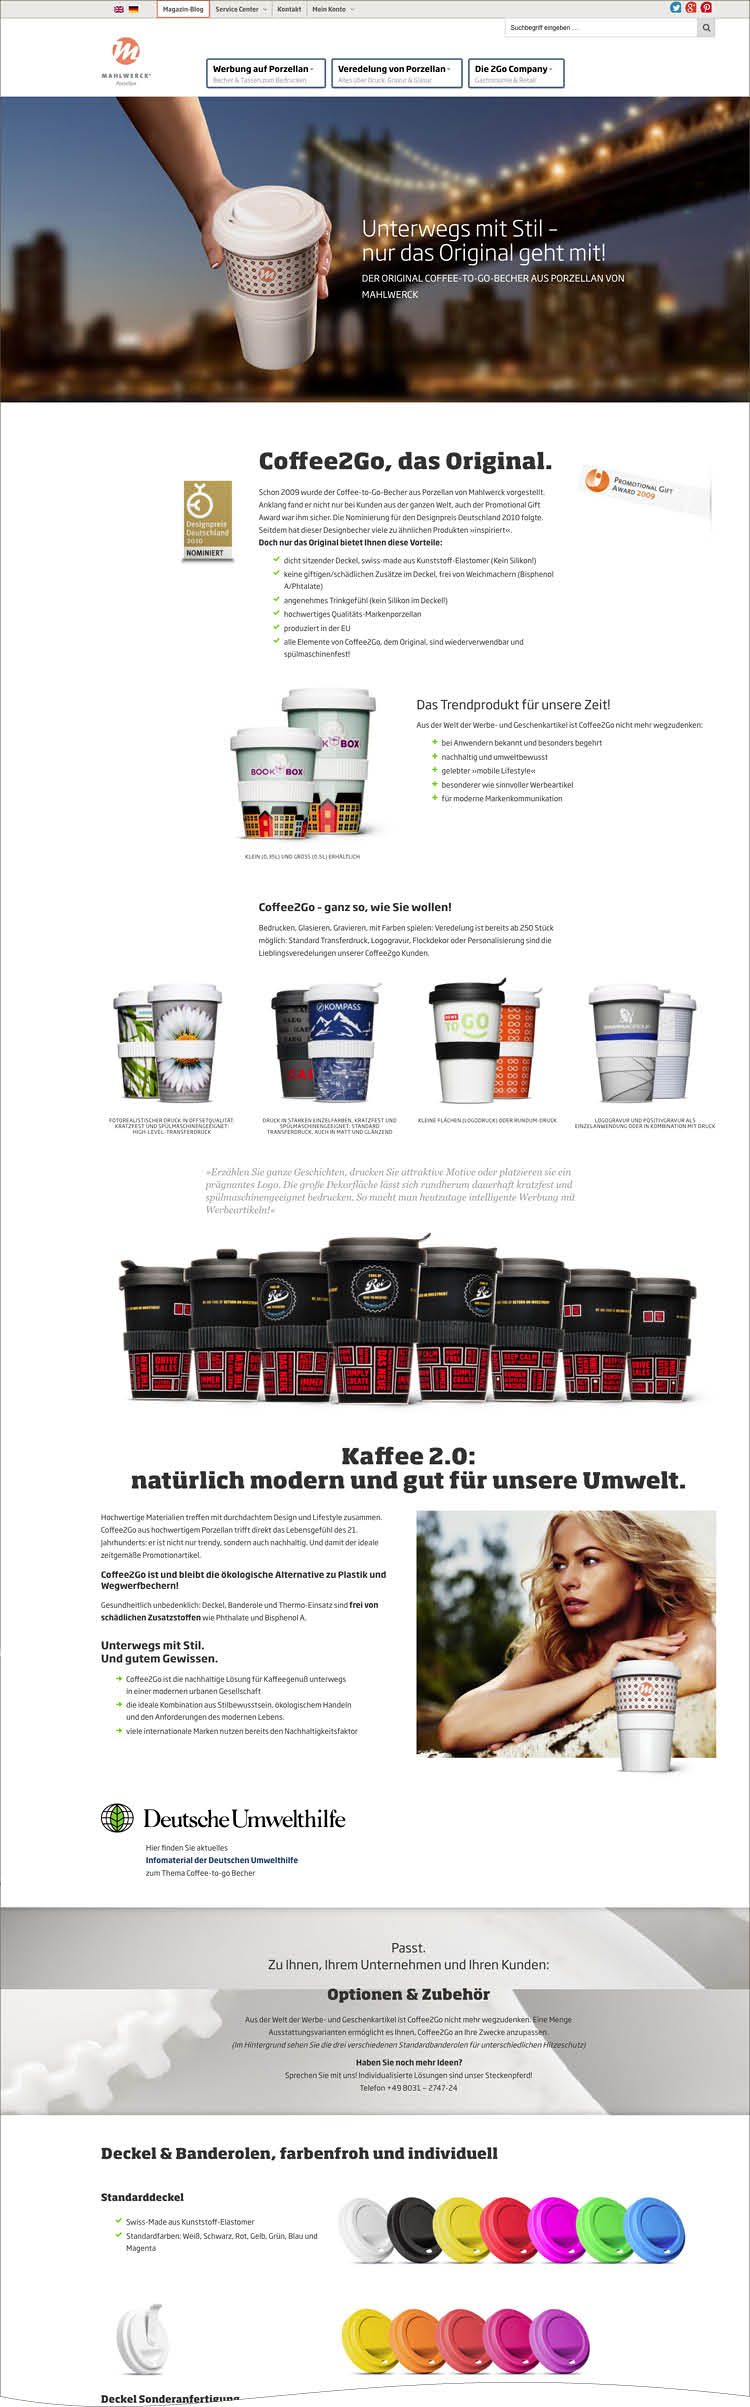 Das Product Special für Coffee to Go - Mahlwerck Website